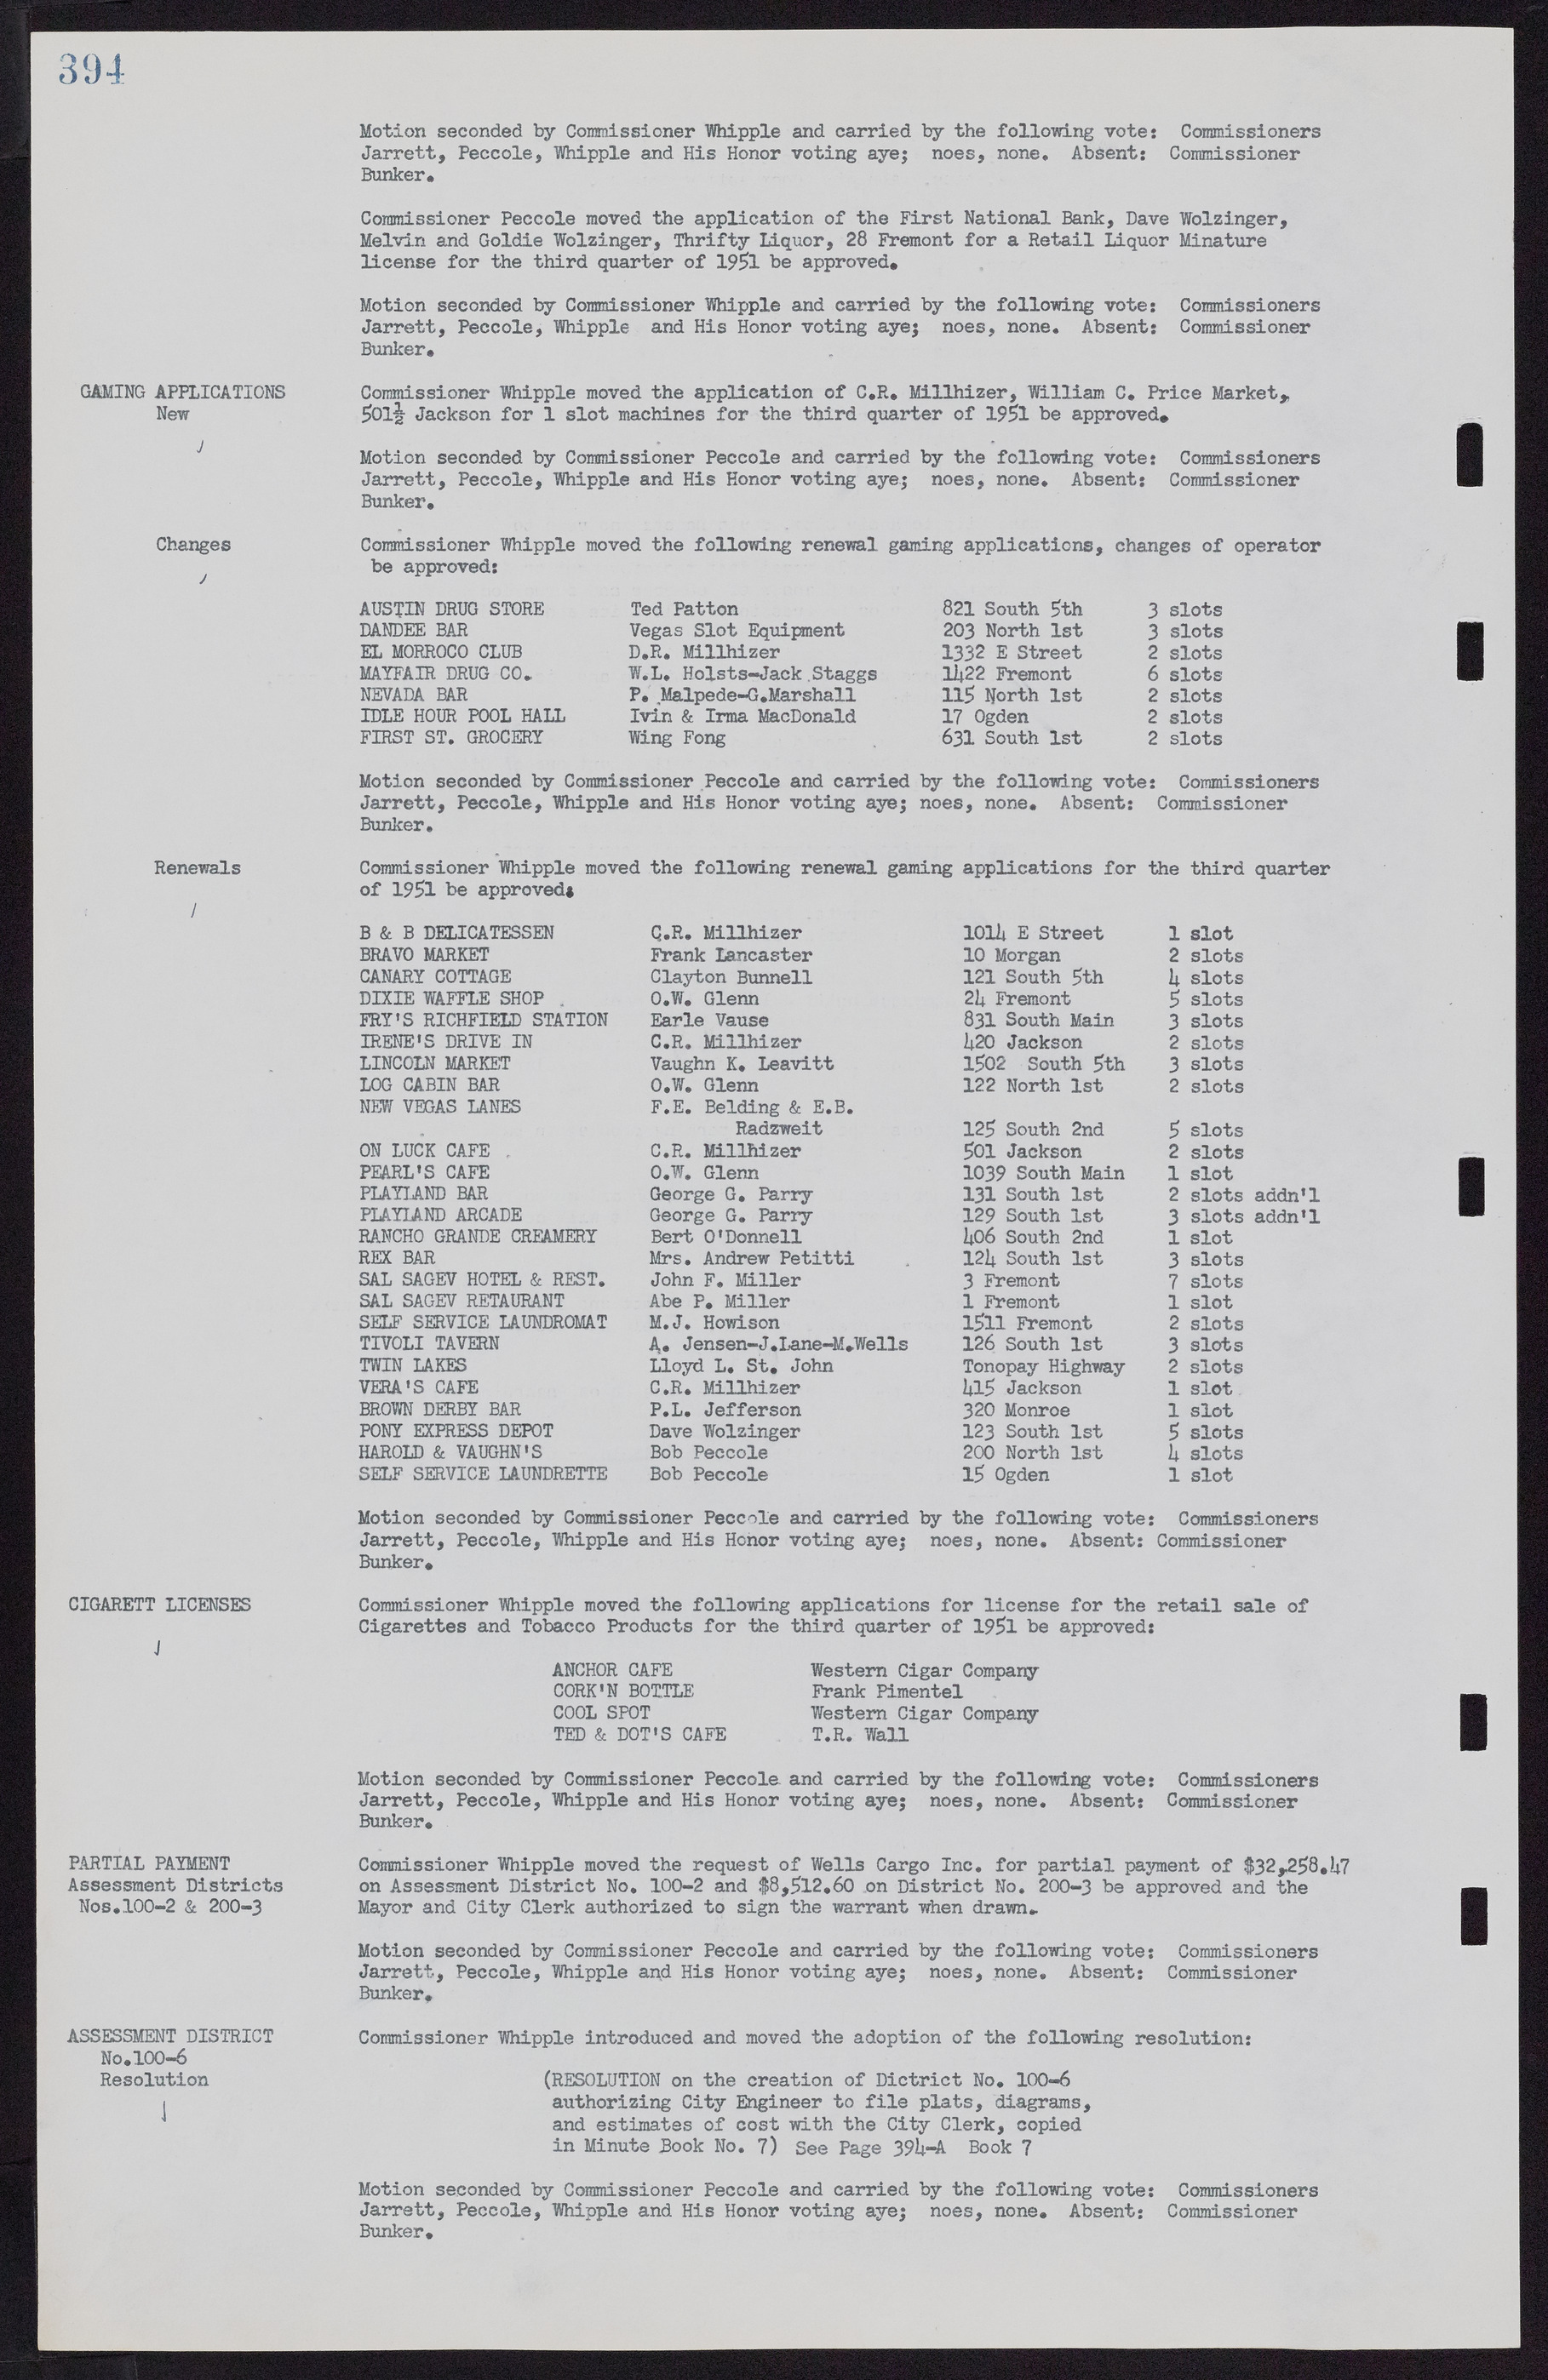 Las Vegas City Commission Minutes, November 7, 1949 to May 21, 1952, lvc000007-408